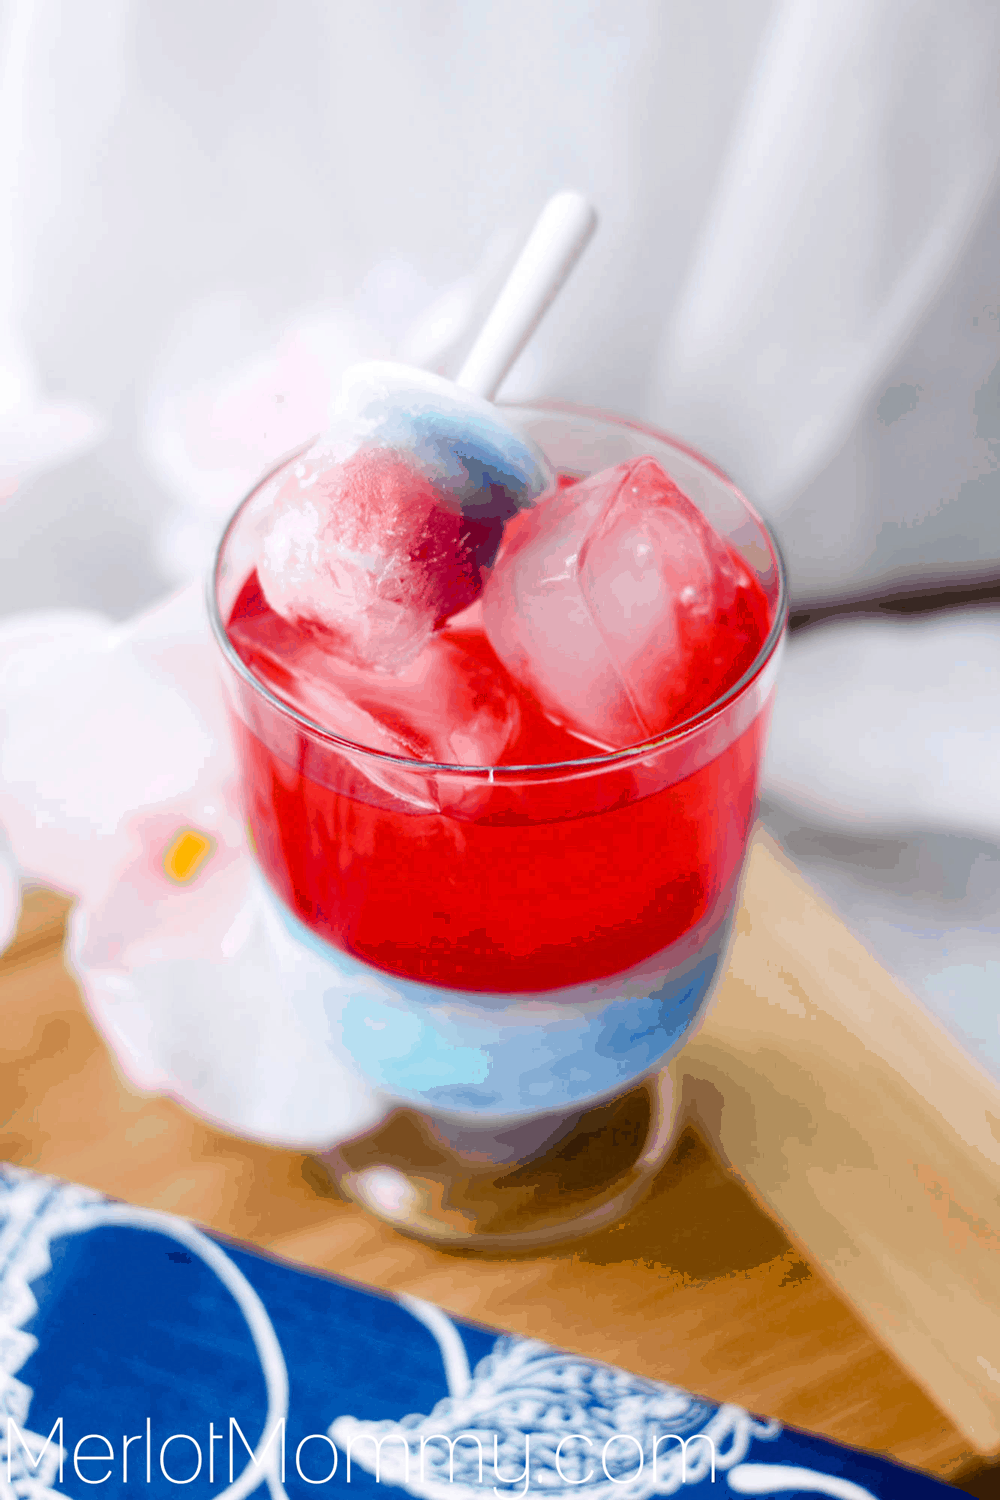 Captain America: Civil War Inspired Cocktail & Sugar Cherry Minisicle